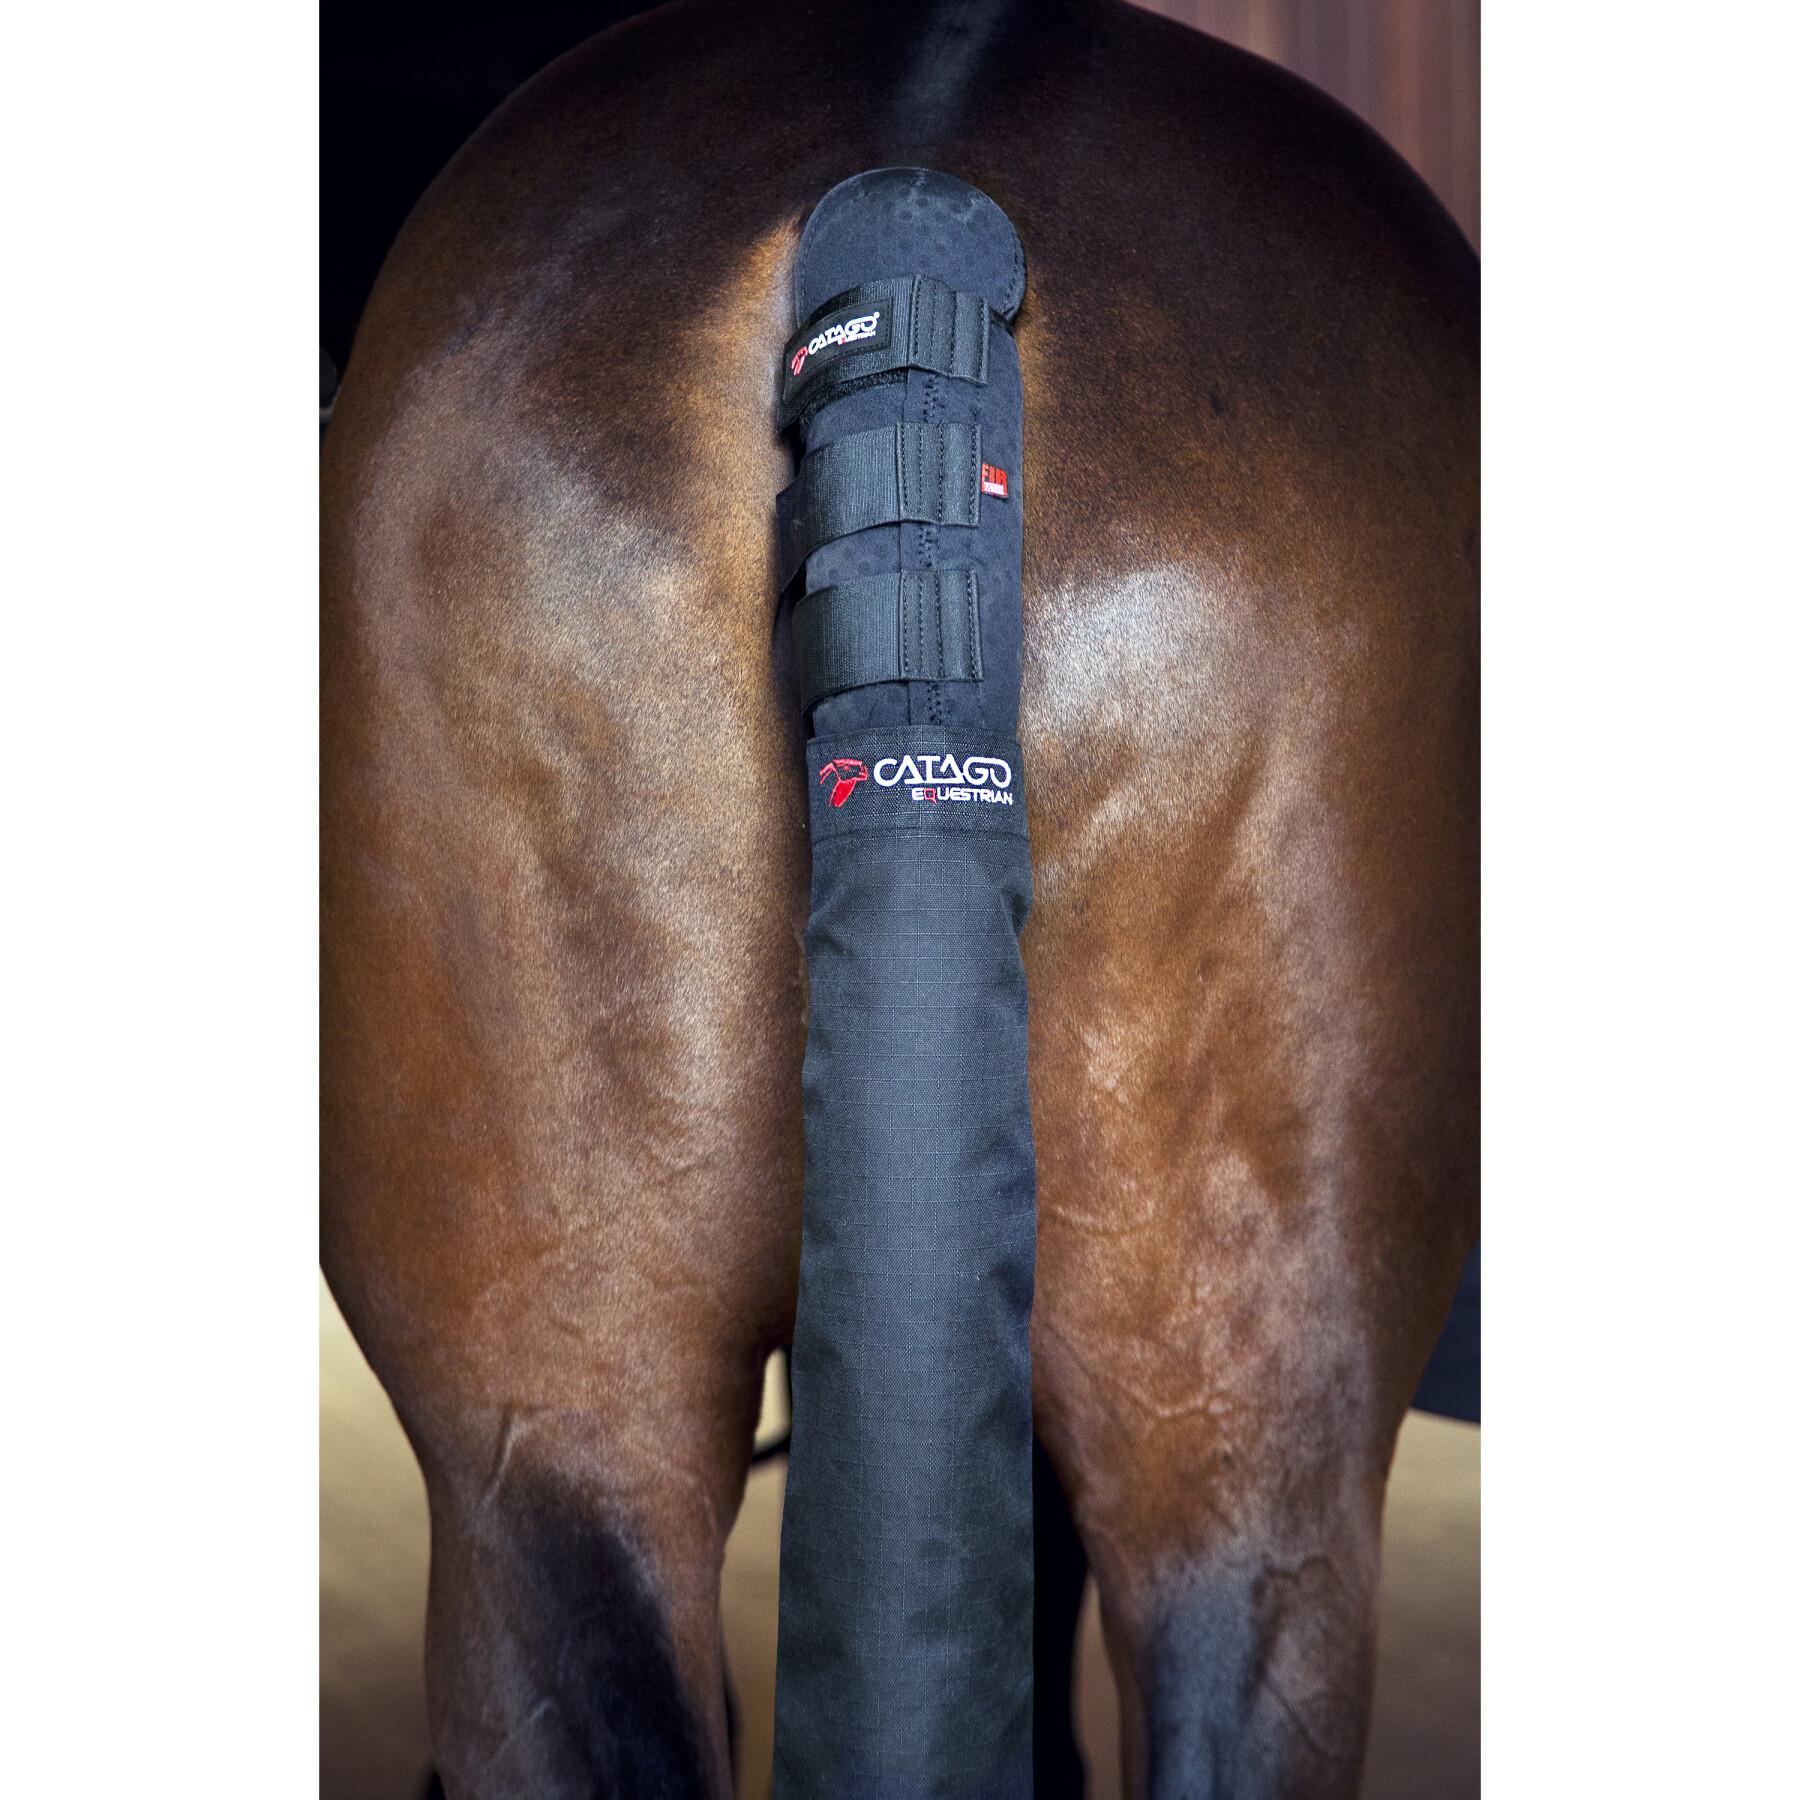 Staartbeschermer voor paarden Catago FIR-Tech